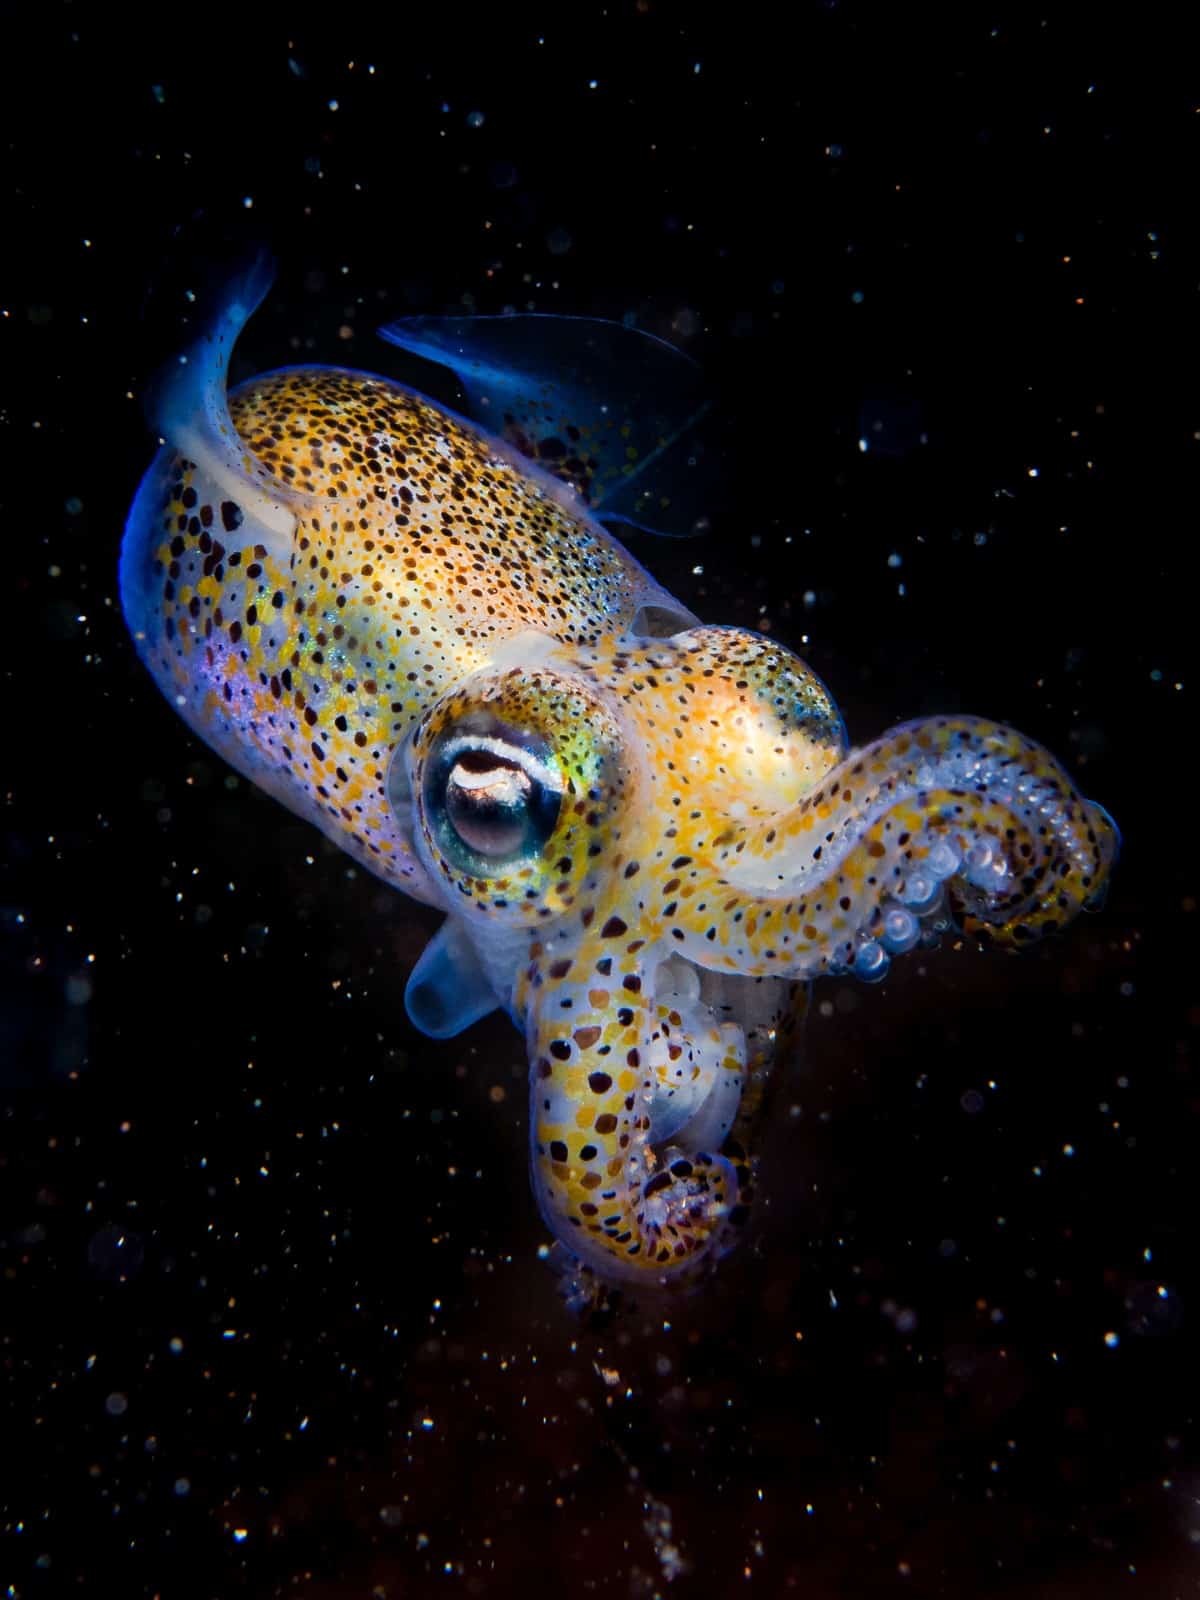 Blackwater Photo of a Bobtail Squid